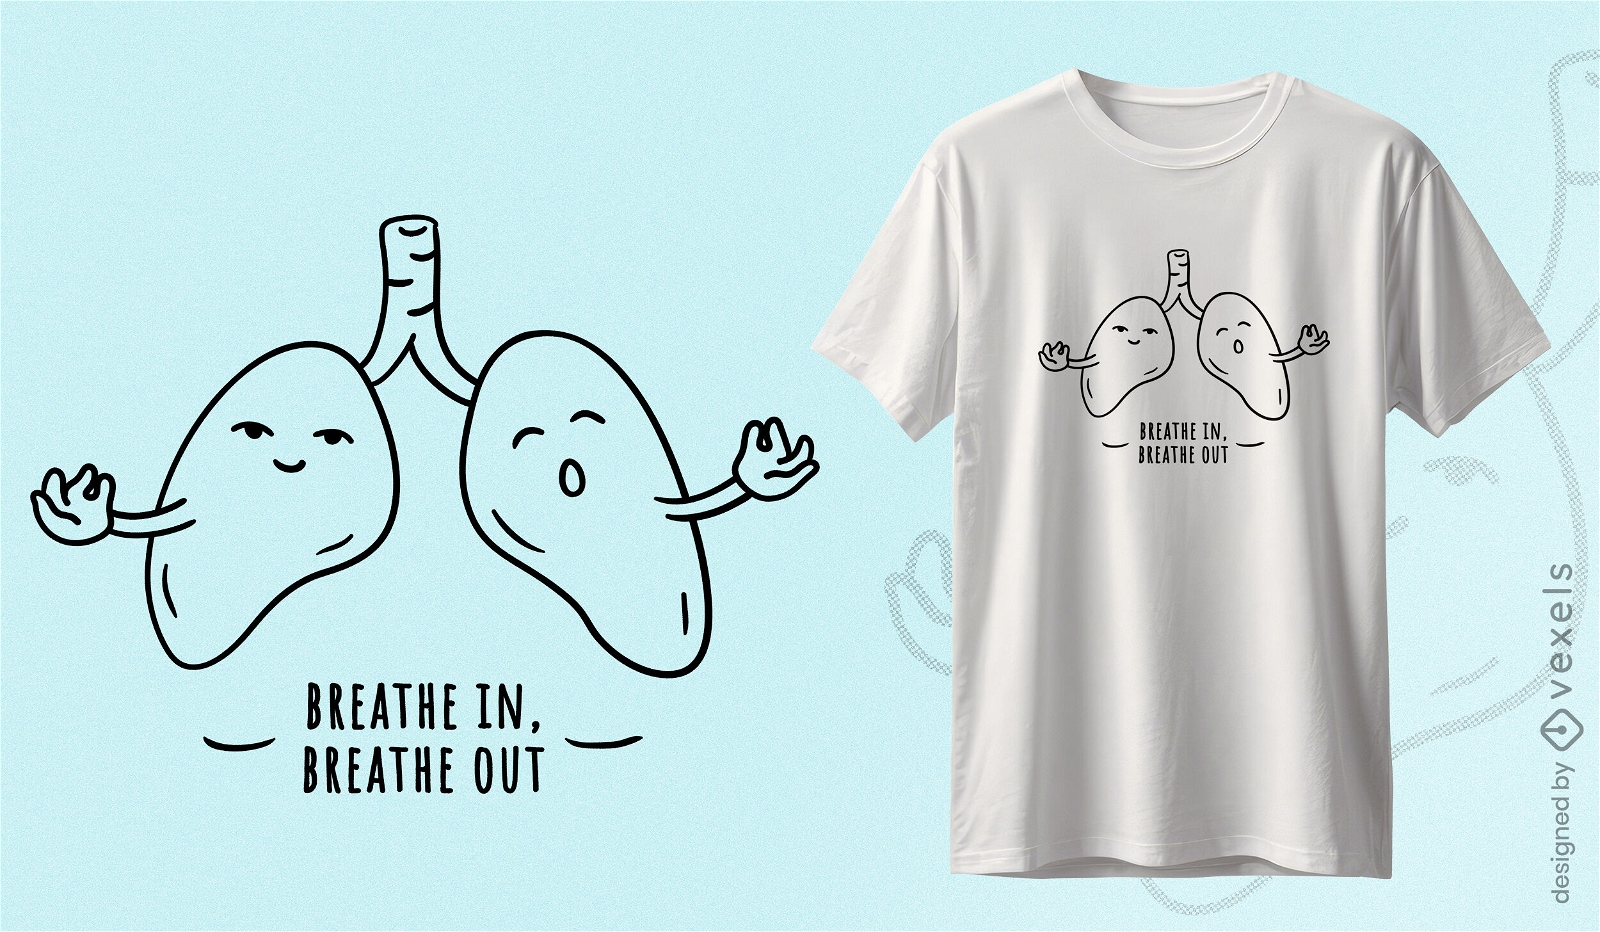 Diseño de camiseta de respiración consciente.